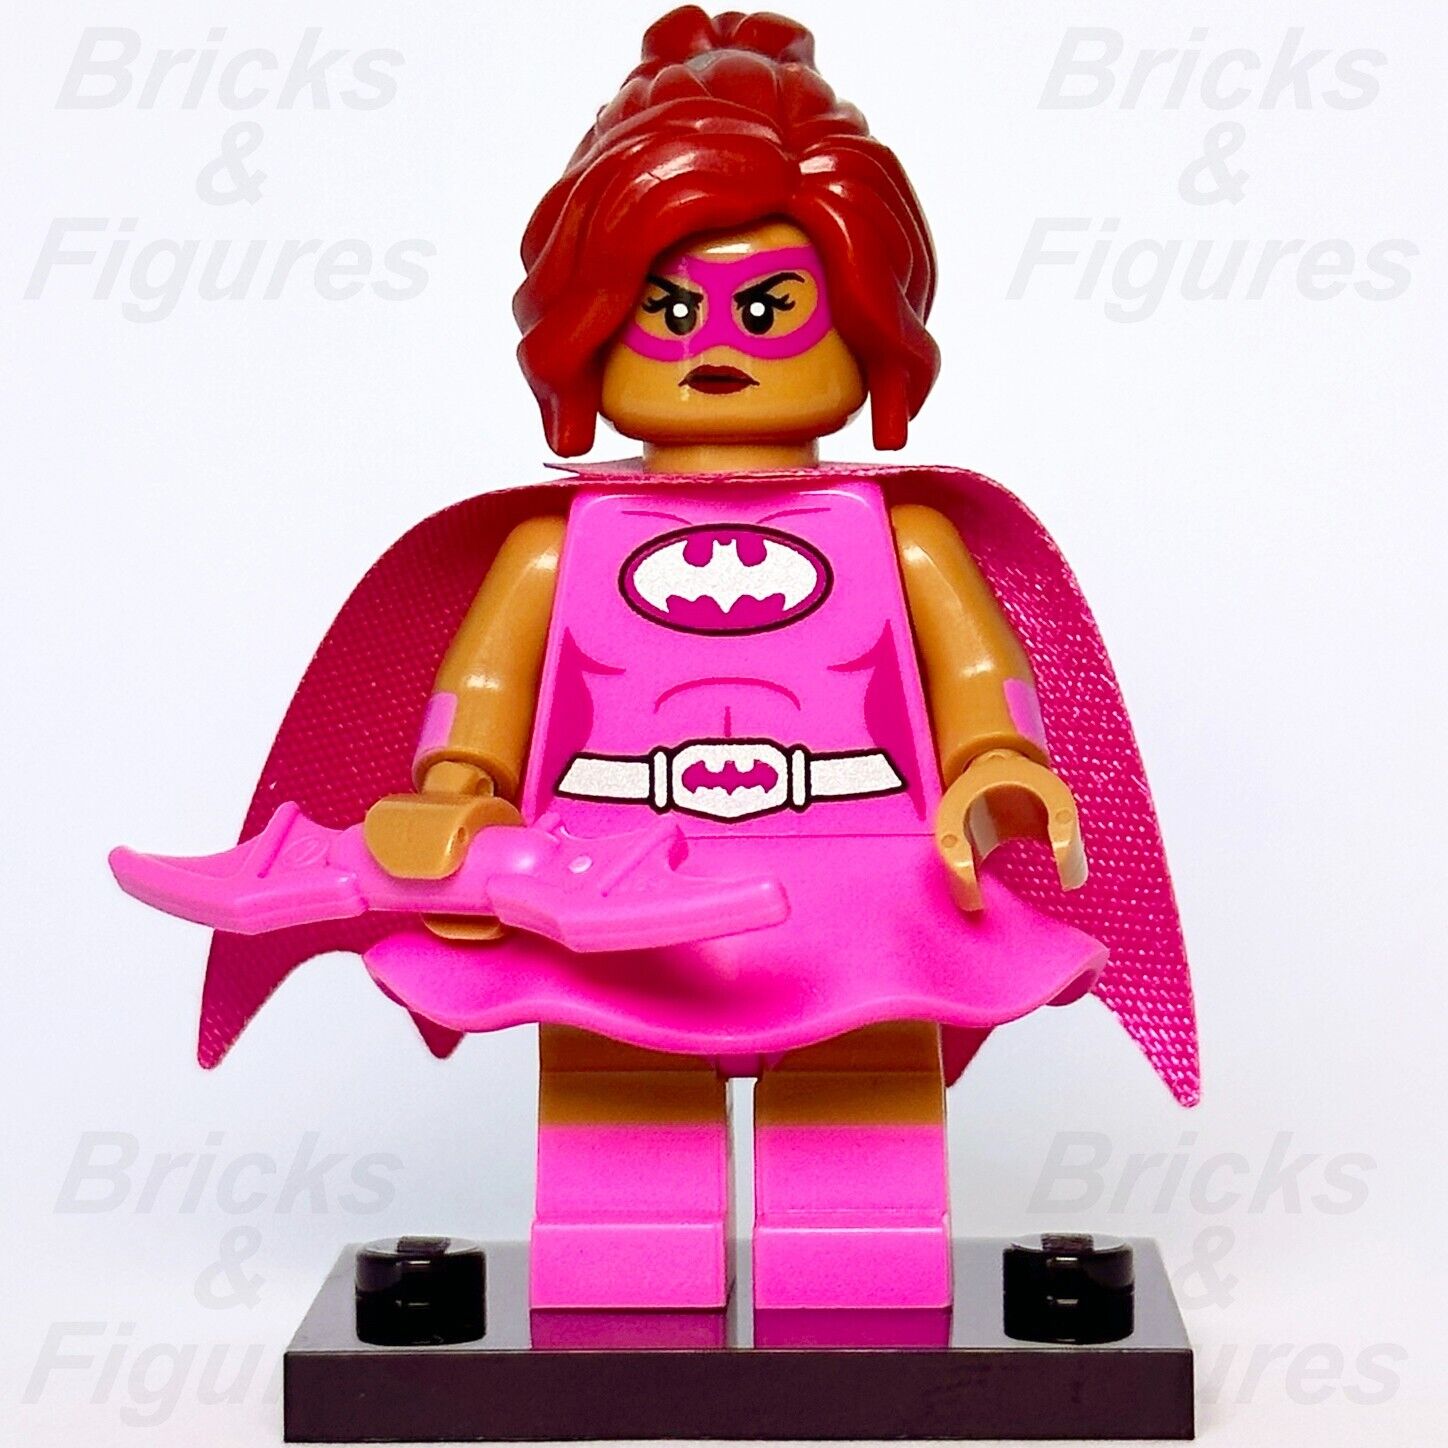 LEGO Pink Power Batgirl The Batman Movie DC Super Heroes Minifigure 71017 New - Bricks & Figures